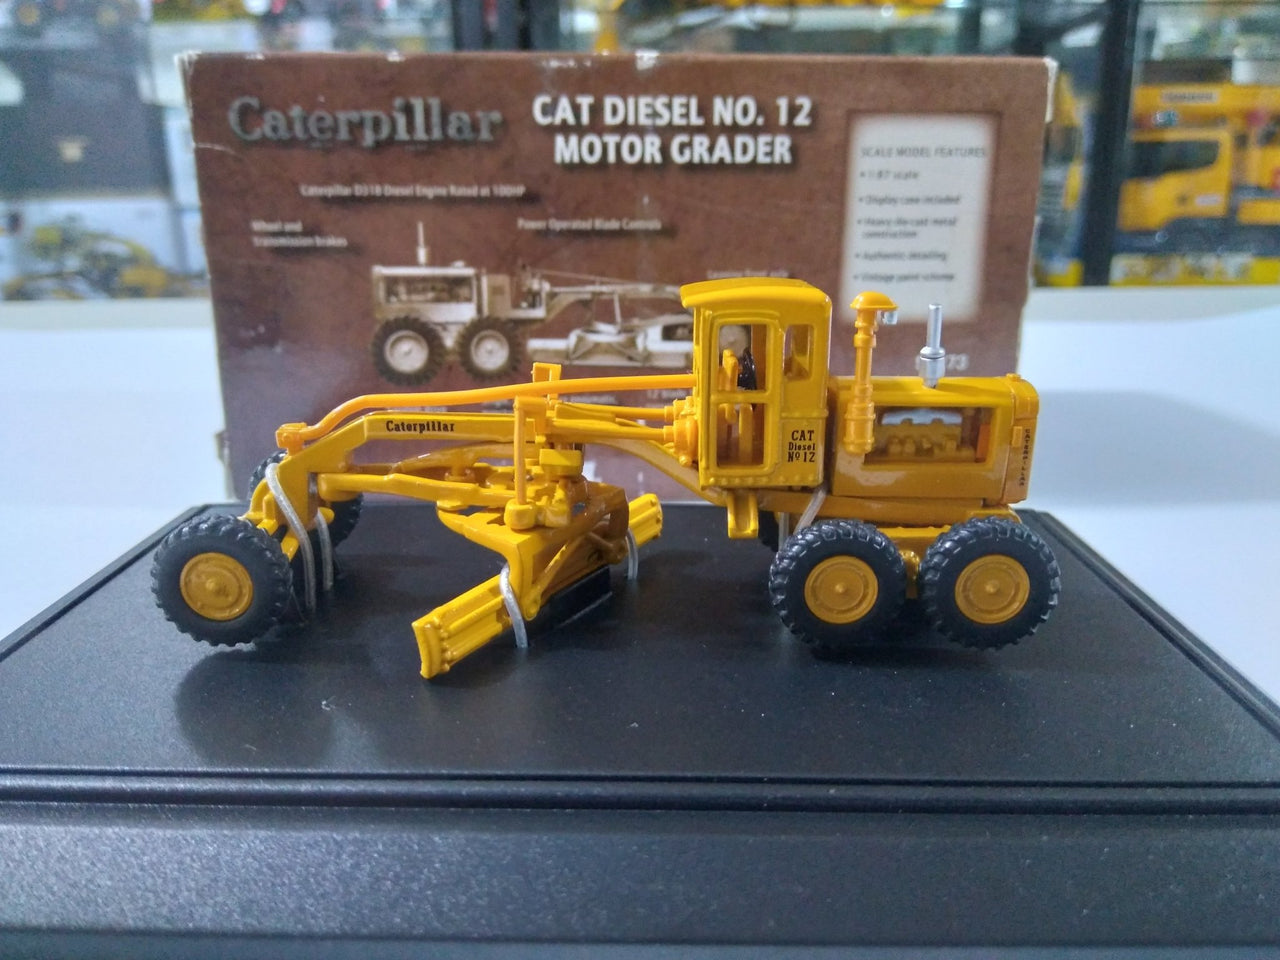 55173 Caterpillar Diesel Motor Grader 12 Scale 1:87